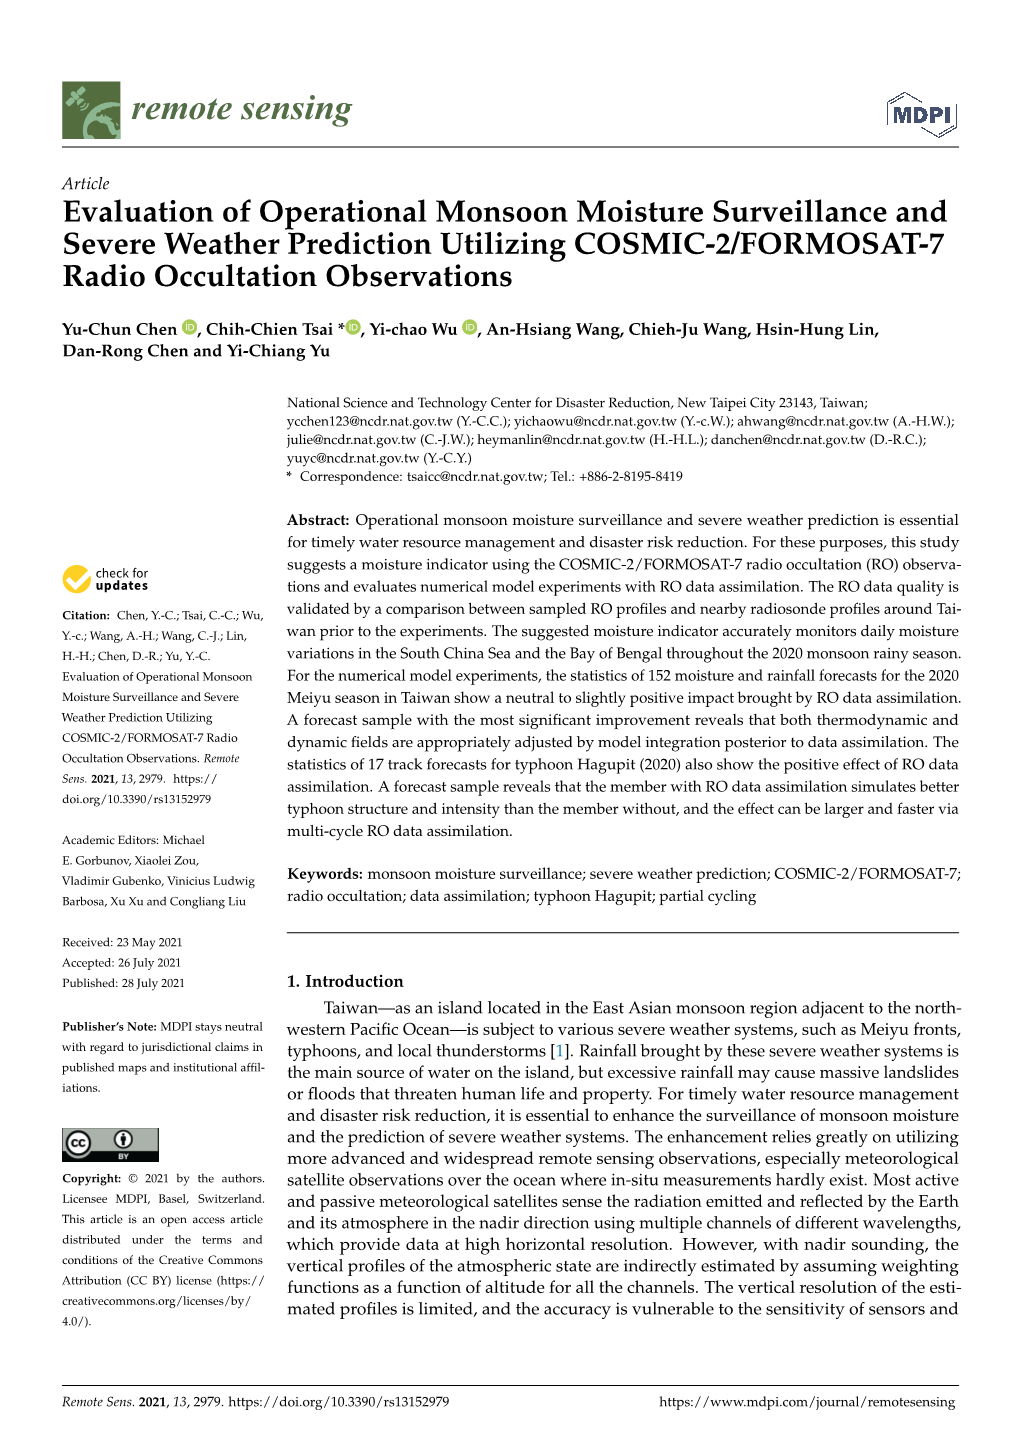 Evaluation of Operational Monsoon Moisture Surveillance and Severe Weather Prediction Utilizing COSMIC-2/FORMOSAT-7 Radio Occultation Observations